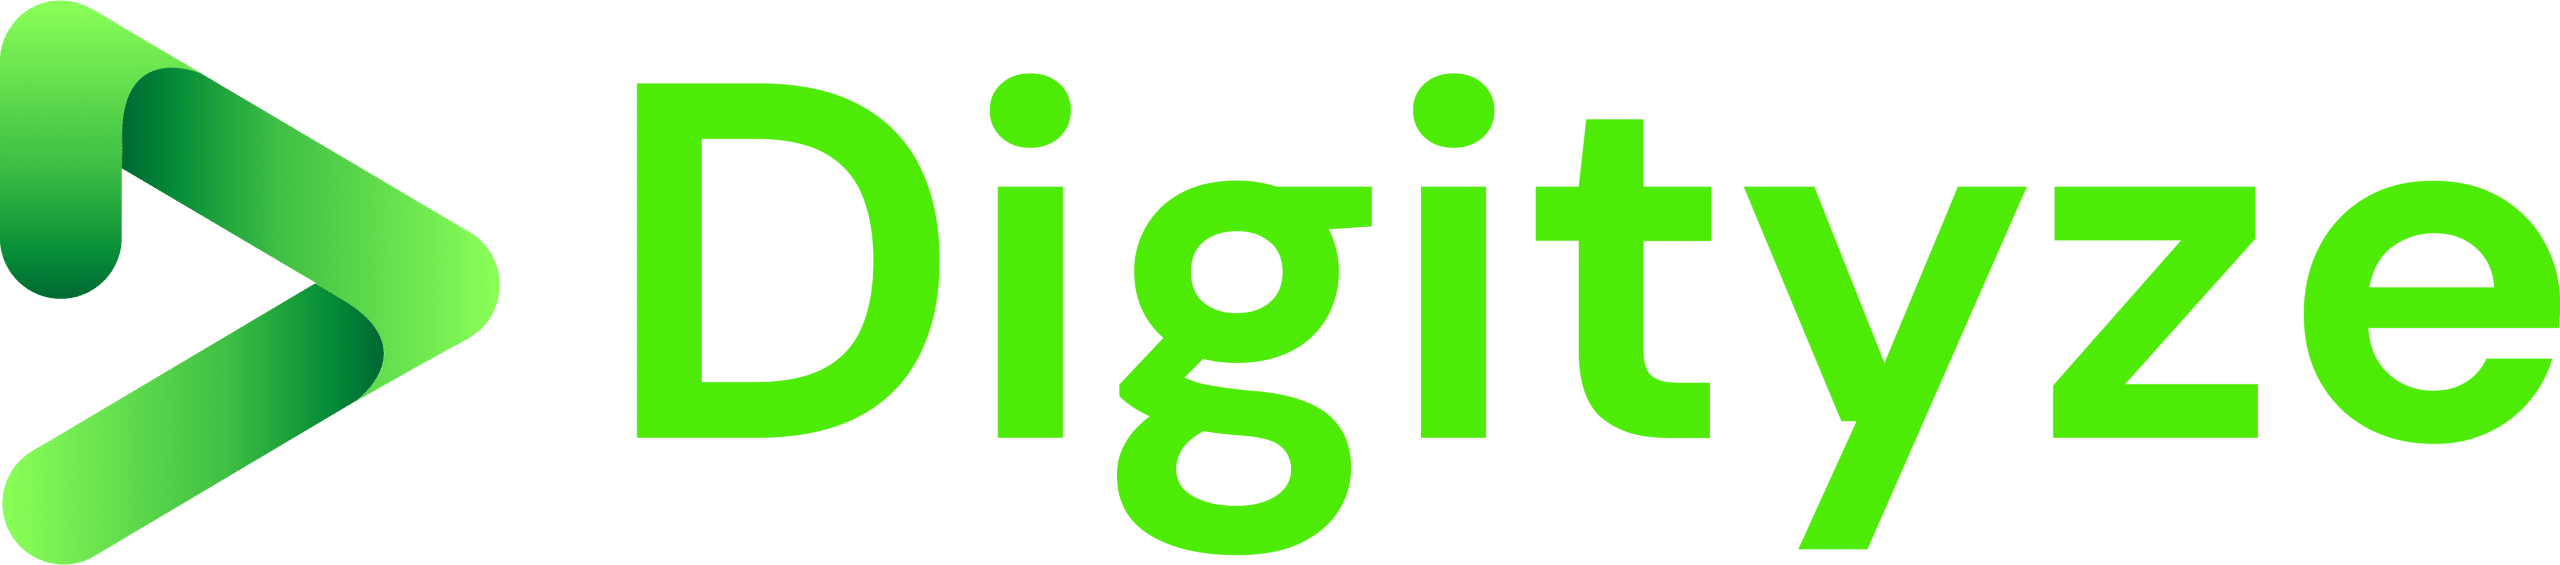 Logo di Digityze in versione pantone verde